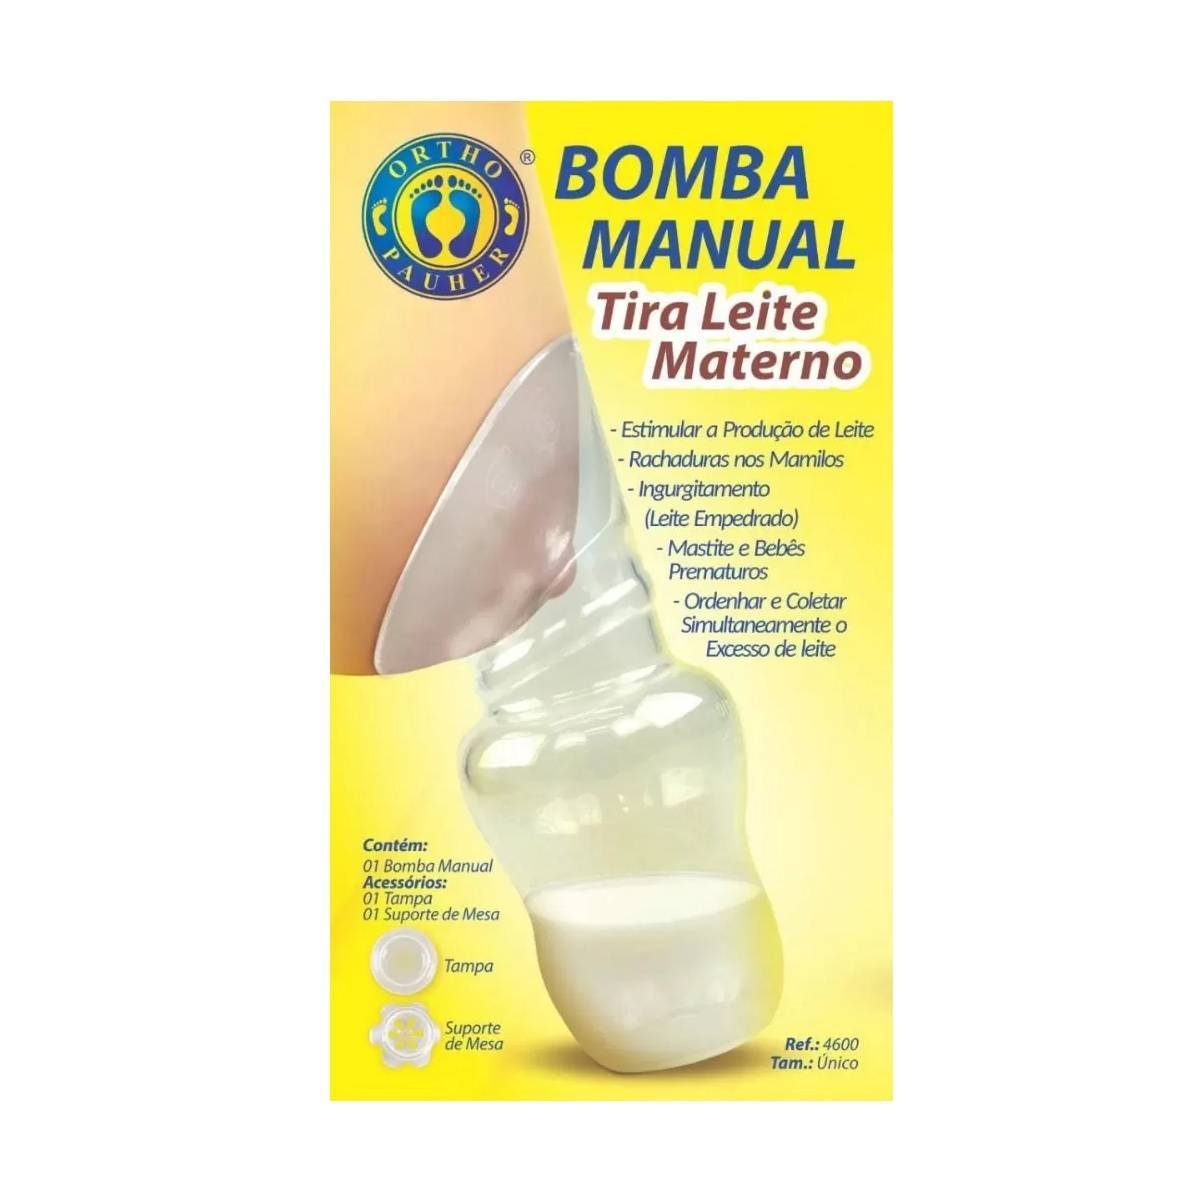 Bomba Manual Tira Leite Materno Orthopauher - Orto Curitiba